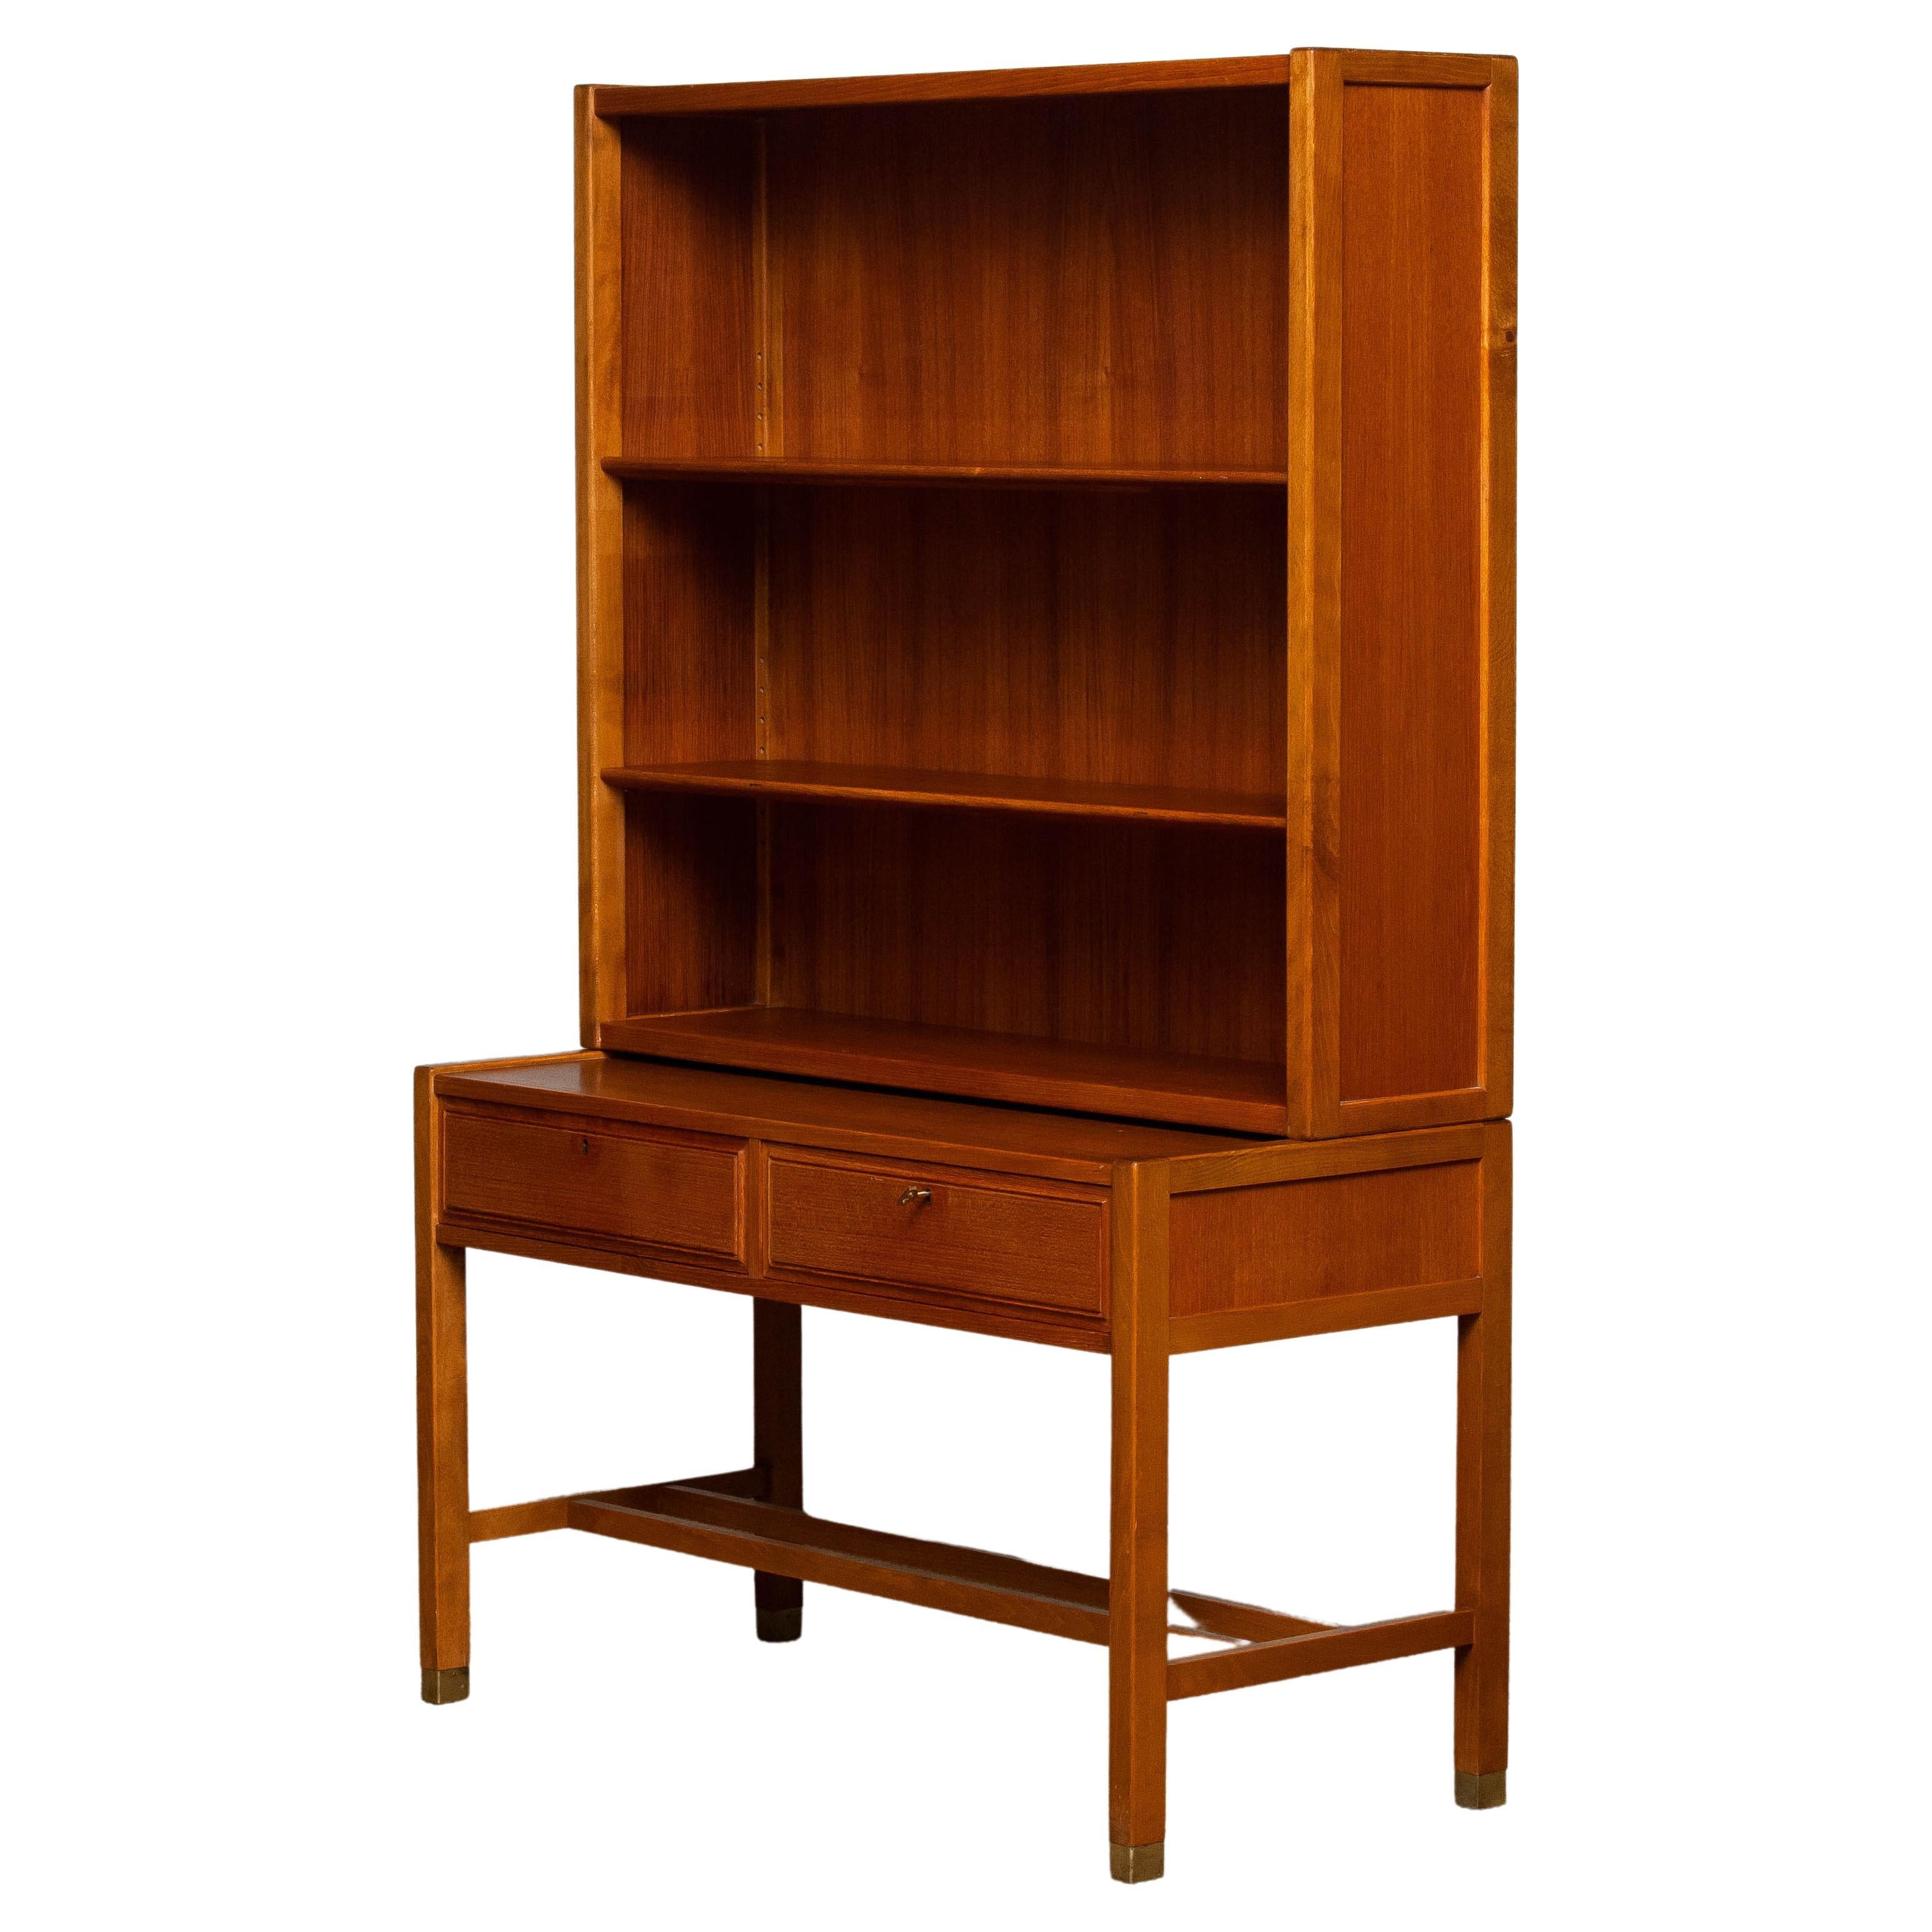 1960s Teak Drawer and Shelfs Cabinet by Carl Aksel Acking for Bodafors, Sweden